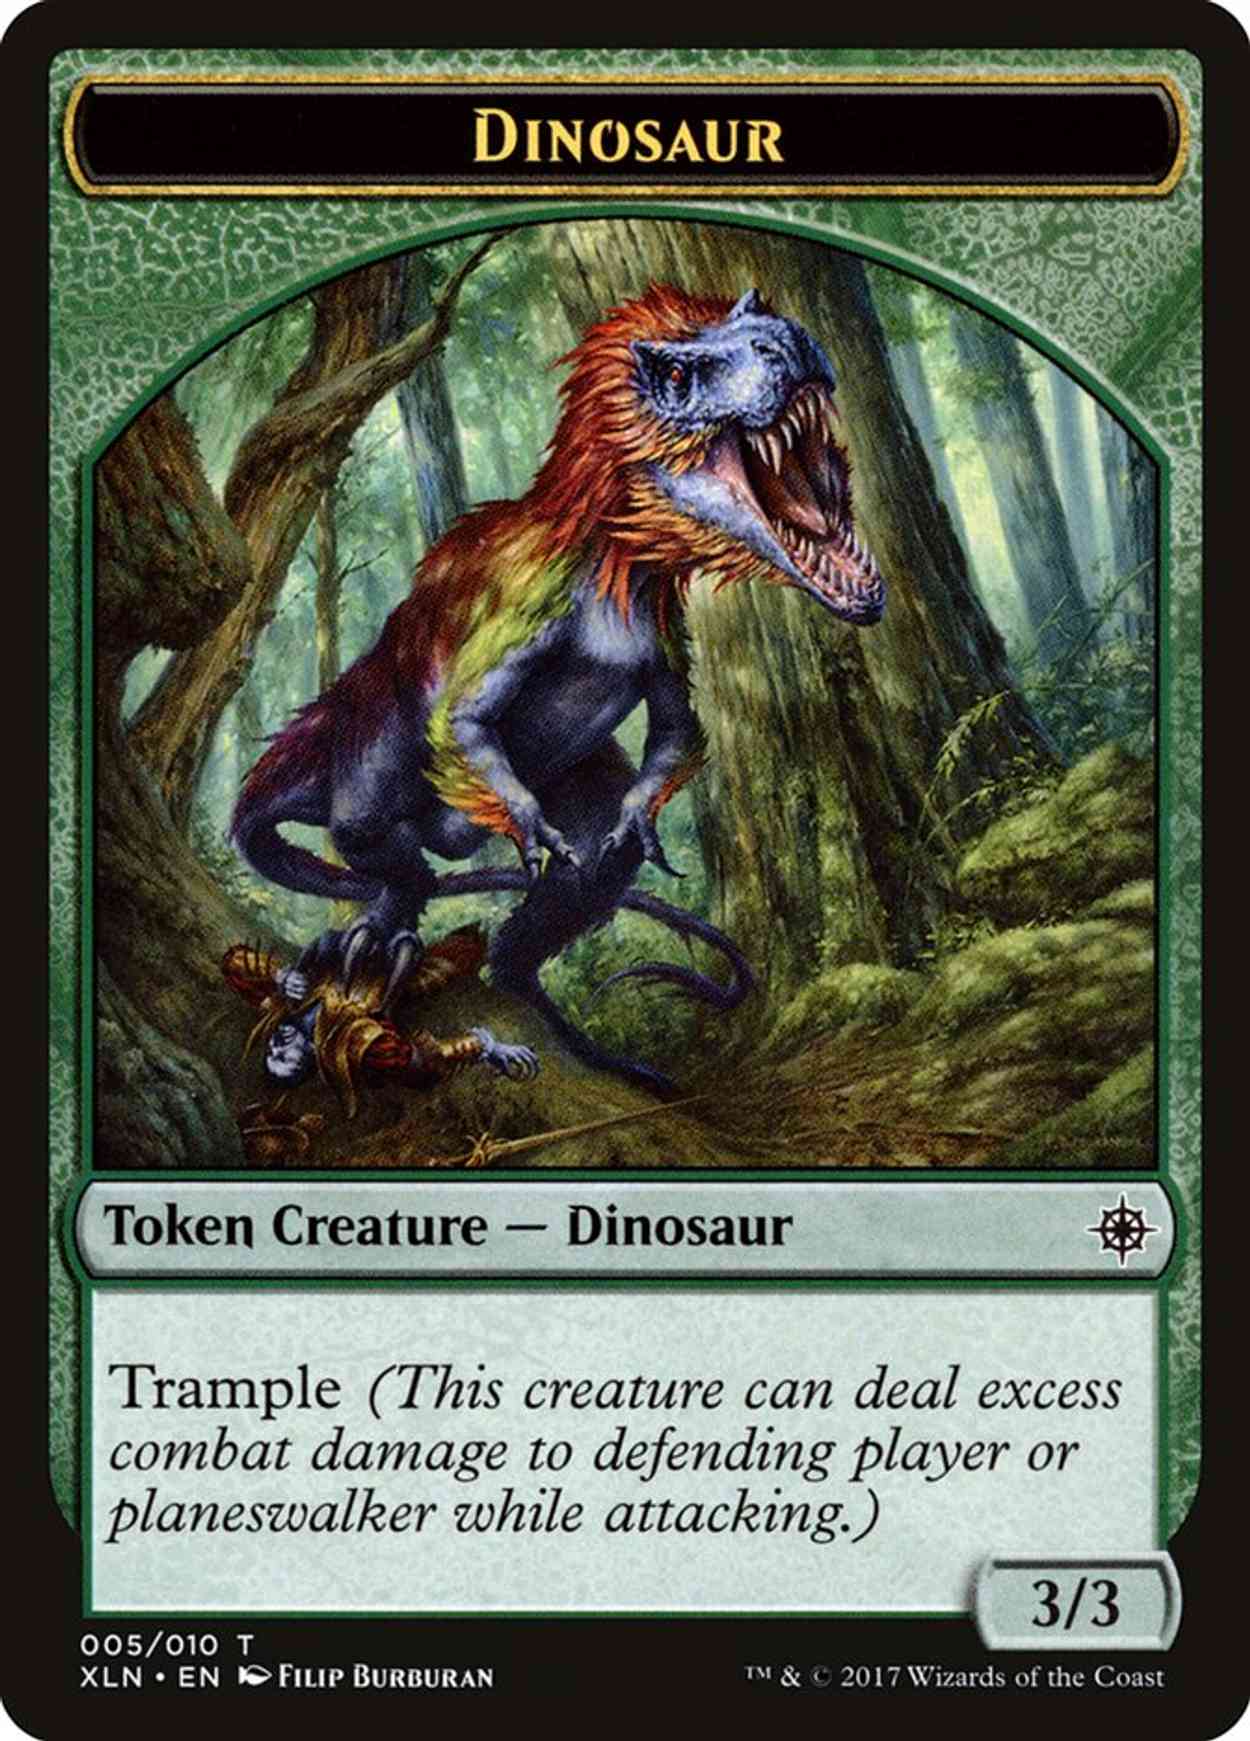 Dinosaur // Treasure (008) Double-sided Token magic card front